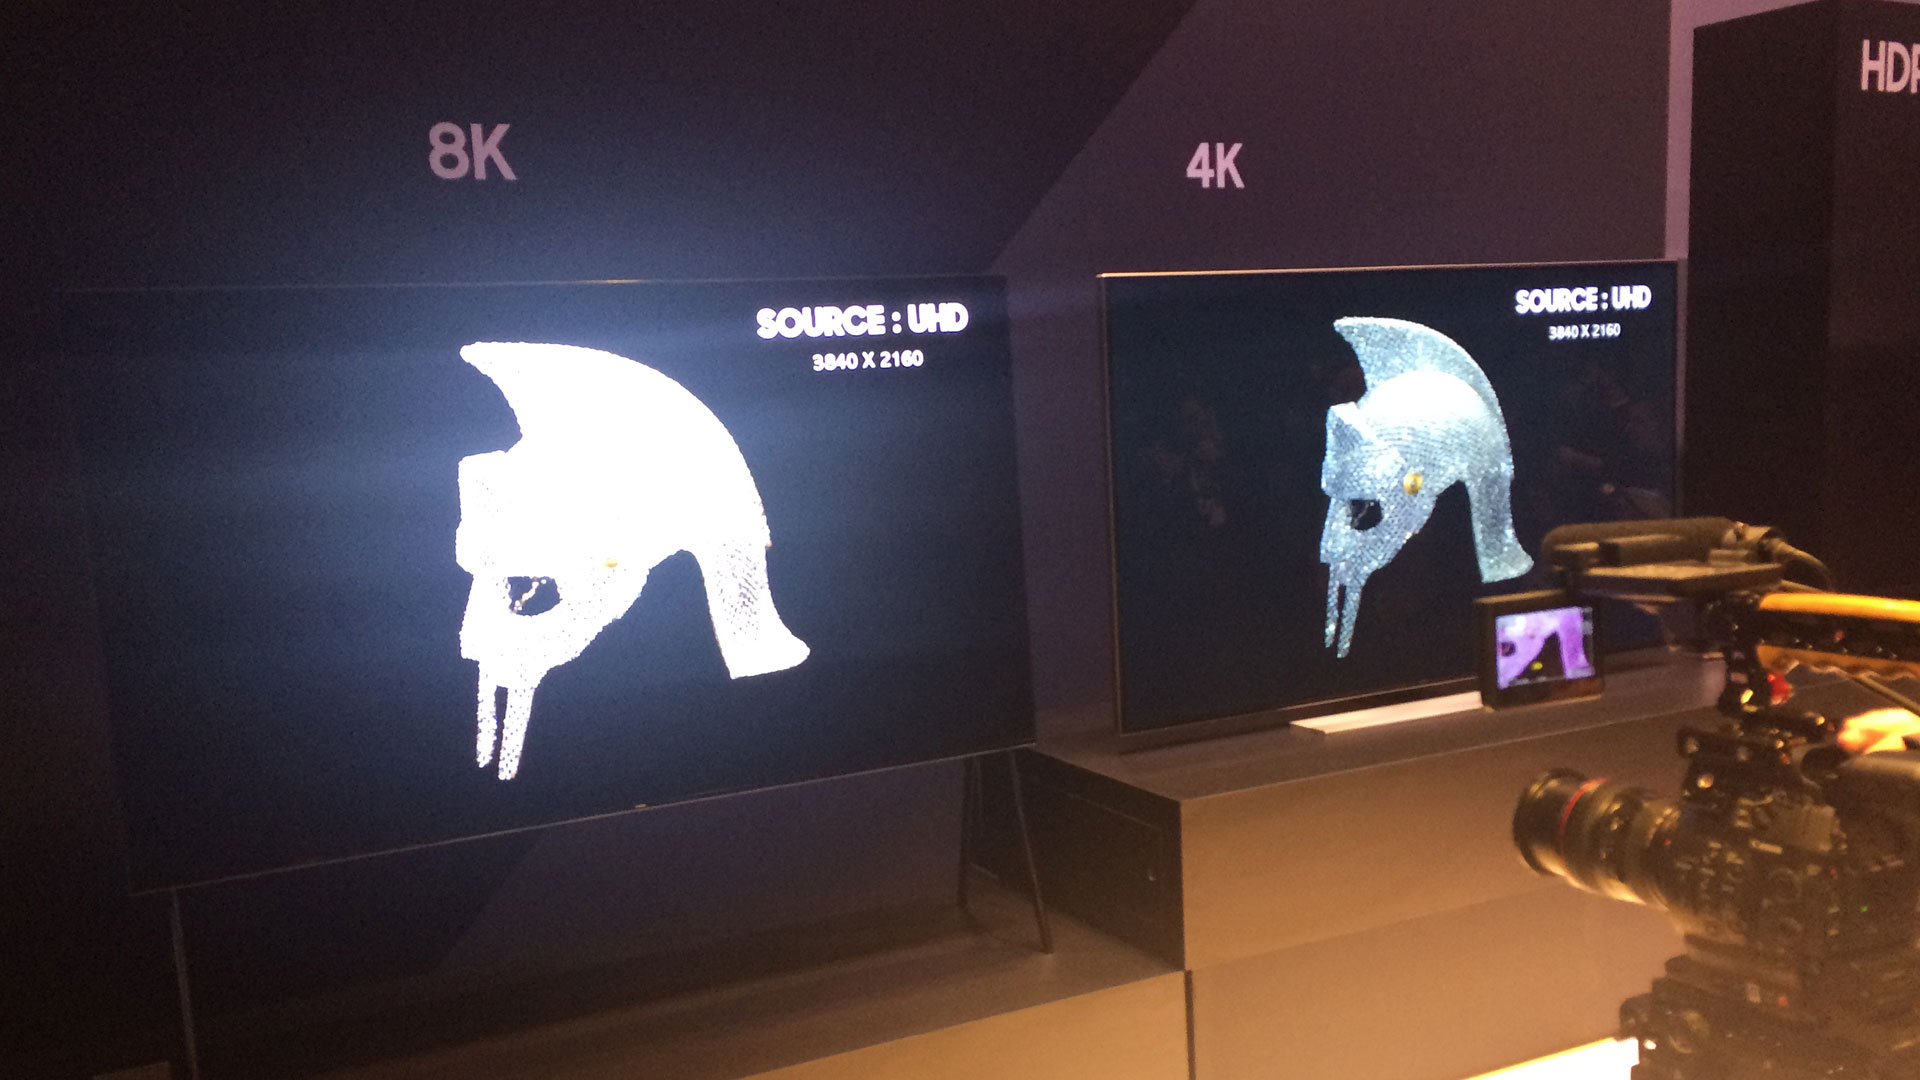 Samsung 8k QLED TVs with AI